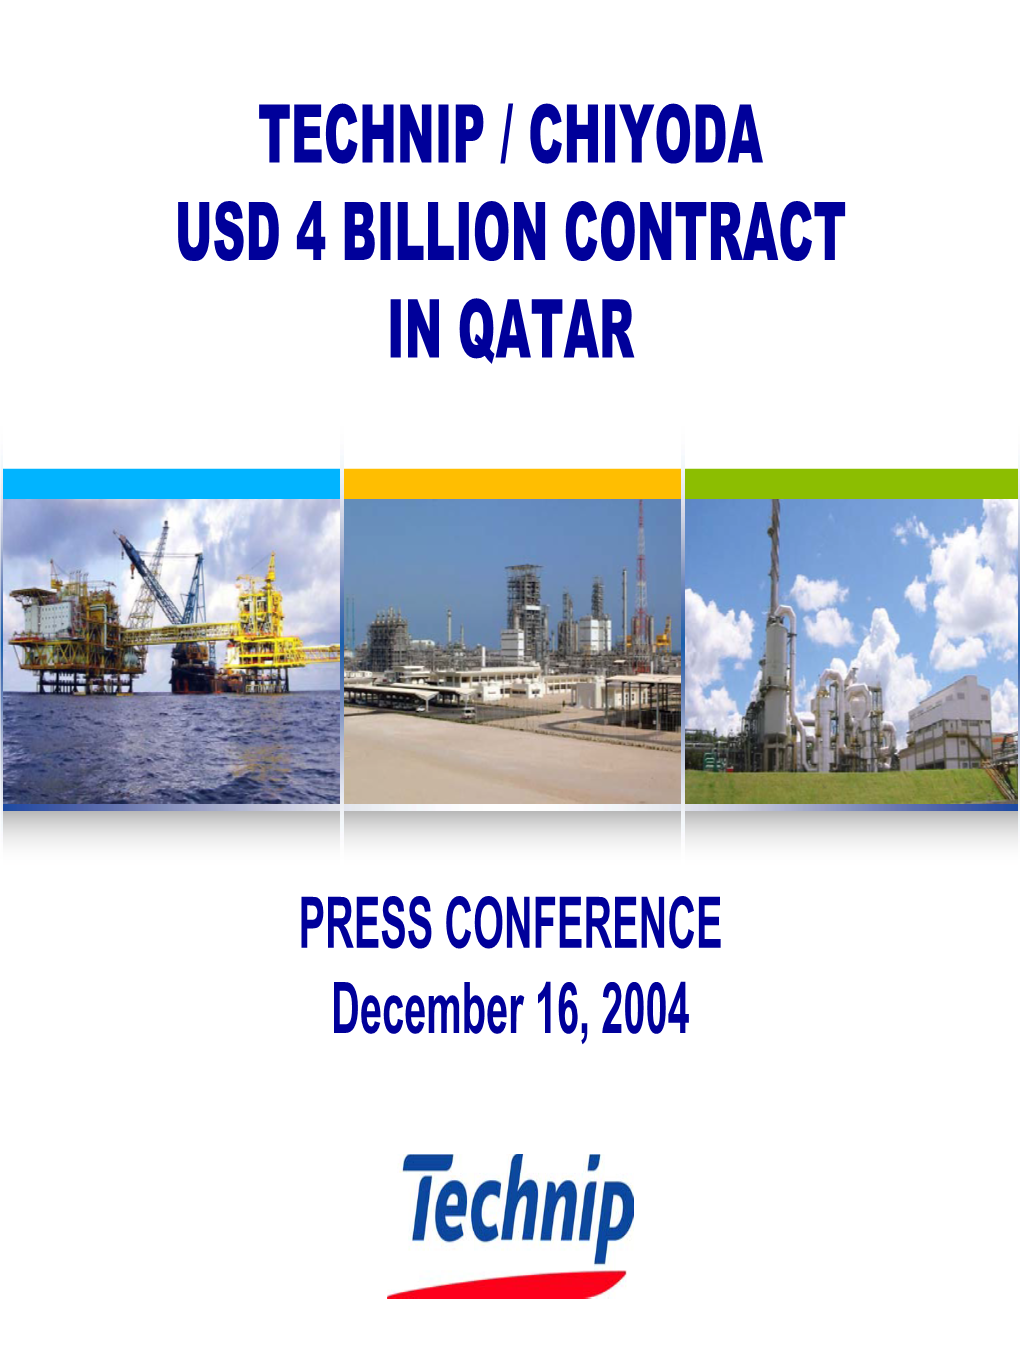 Technip/Chiyoda : USD 4 Billion Contract in Qatar